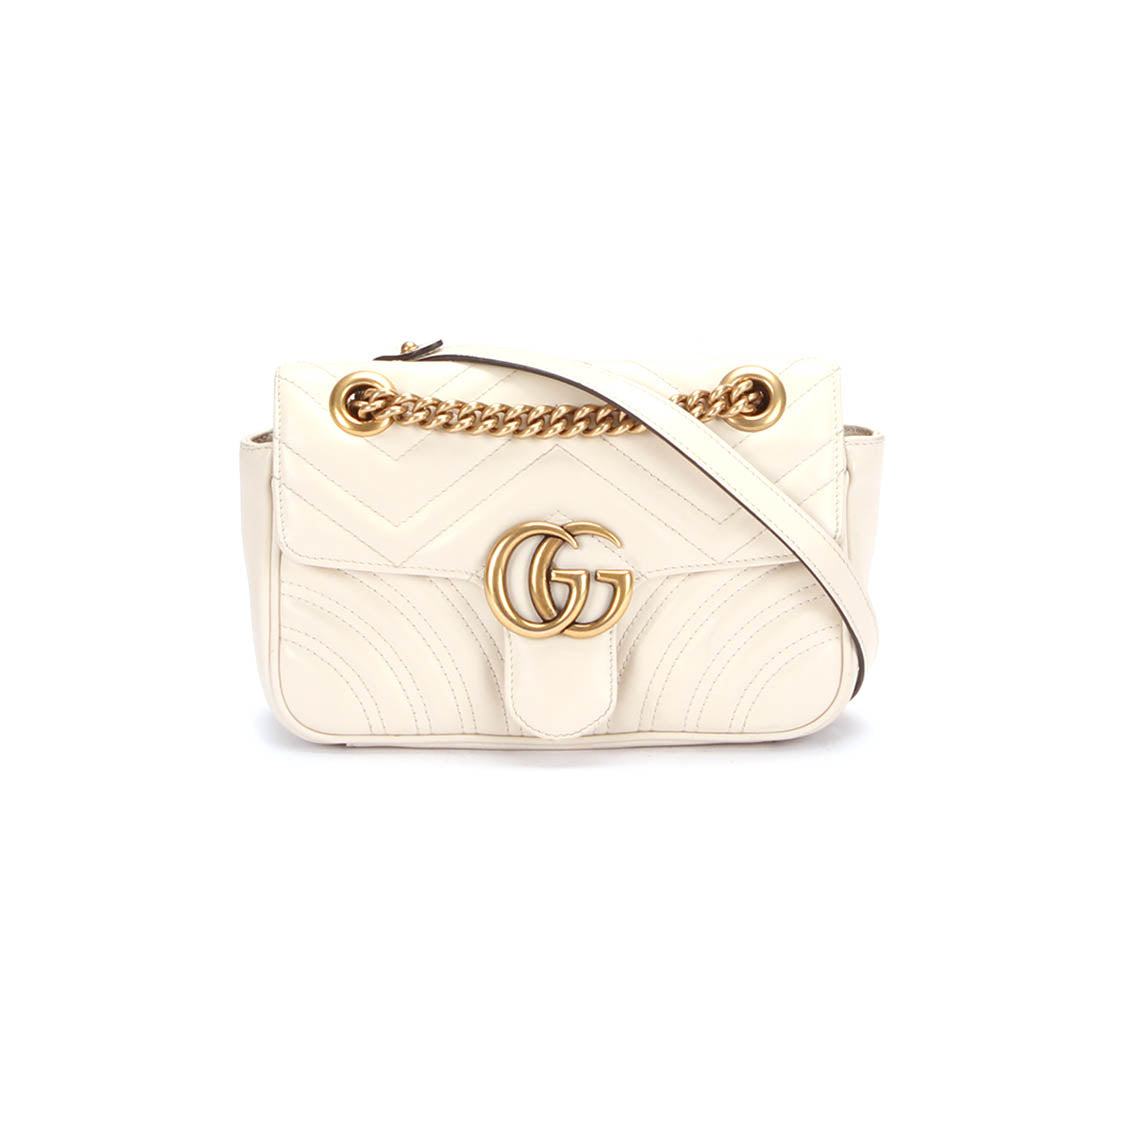 Gucci Mini GG Marmont Leather Shoulder Bag Leather Shoulder Bag 446744 in Good condition